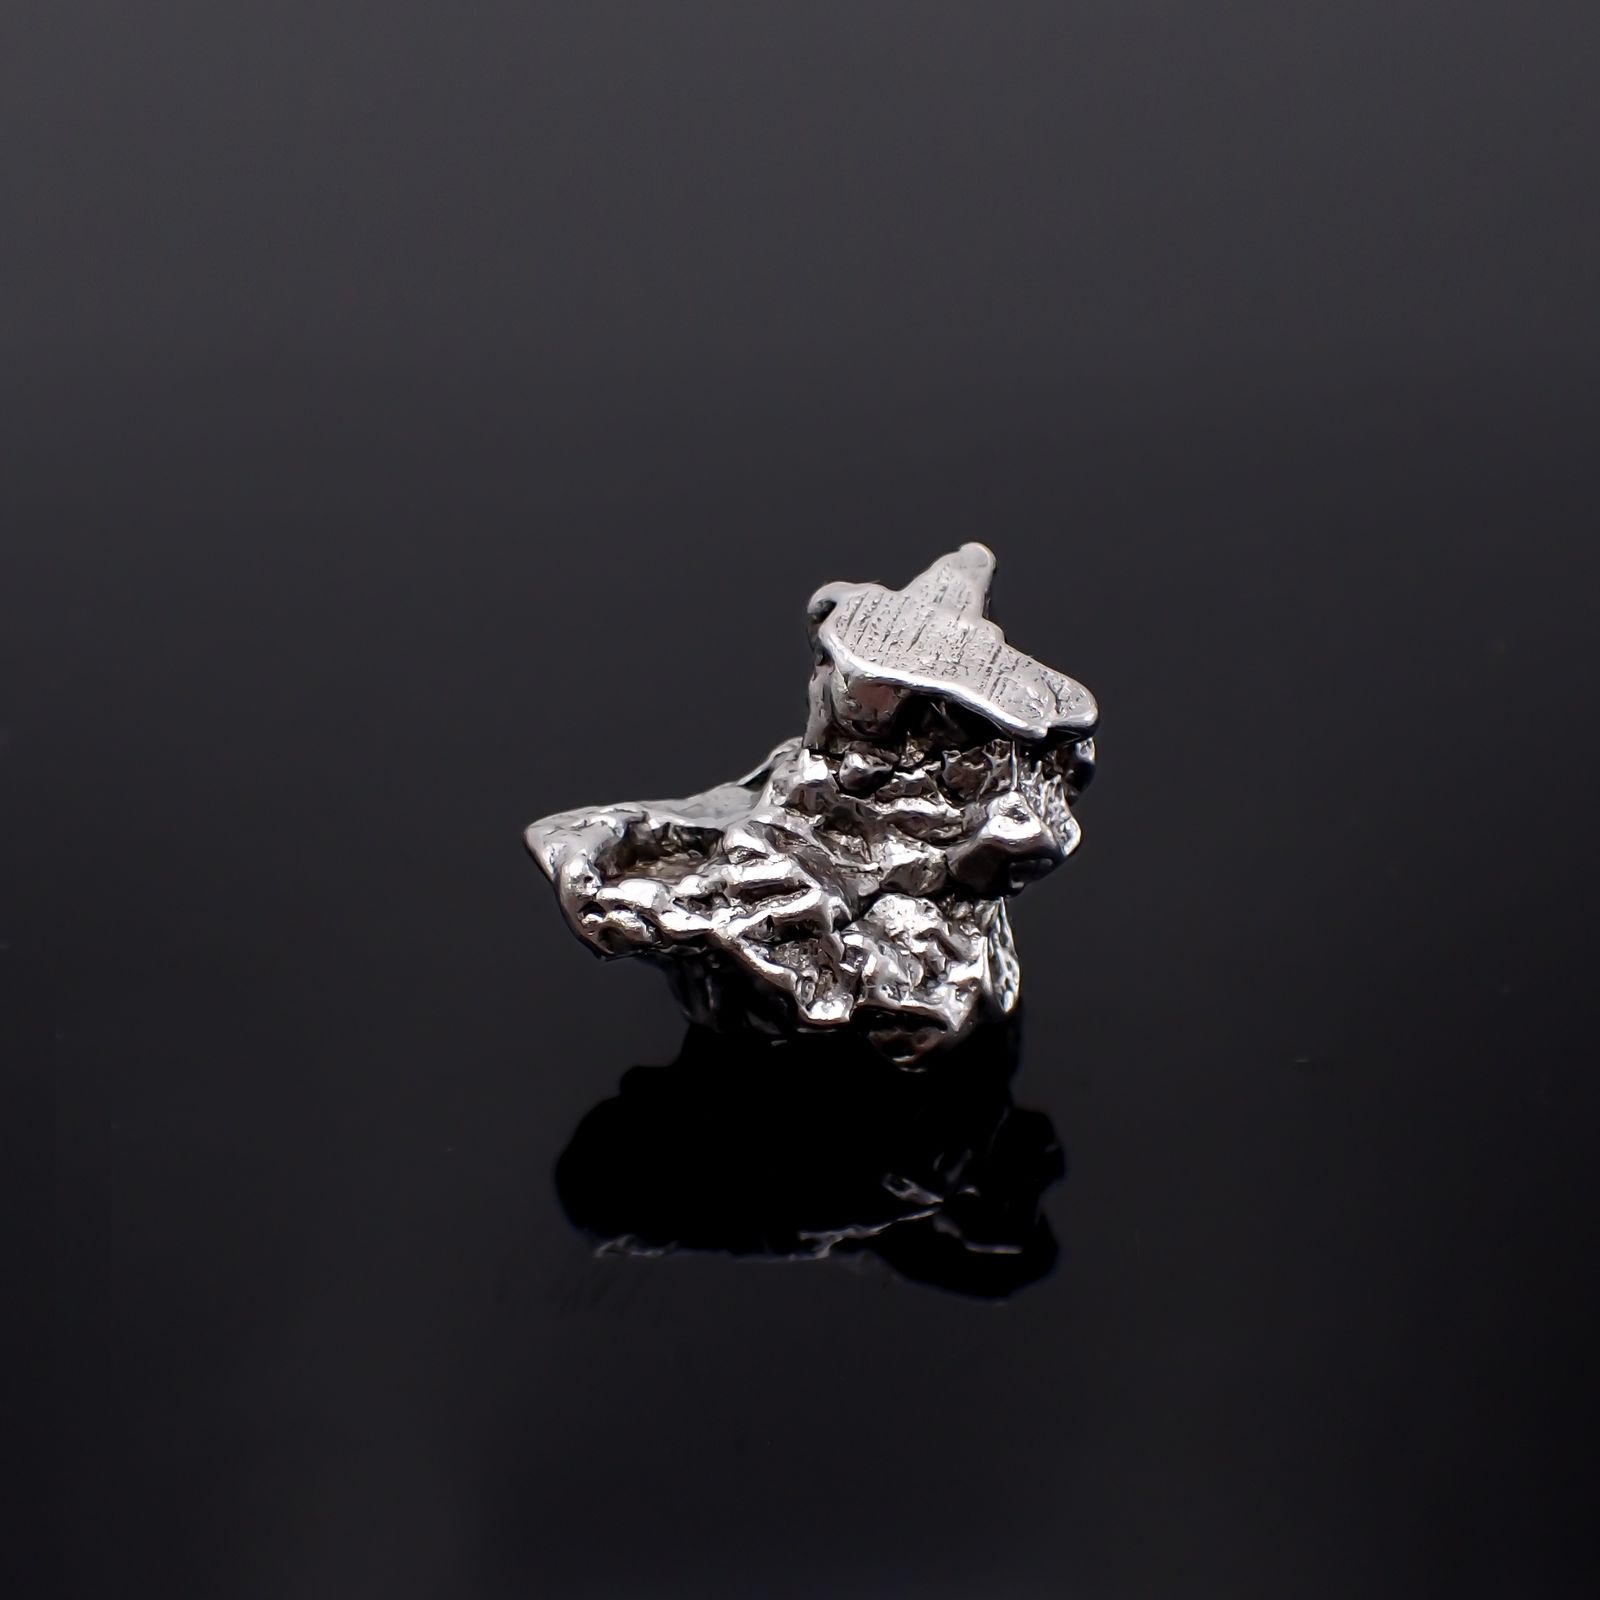 NO.1 カンポデルシエロ隕石(原石)(ケース入り)＜生命力・正しい方向への導き＞アルゼンチンの鉄質隕 天然石現品 - 科学、自然